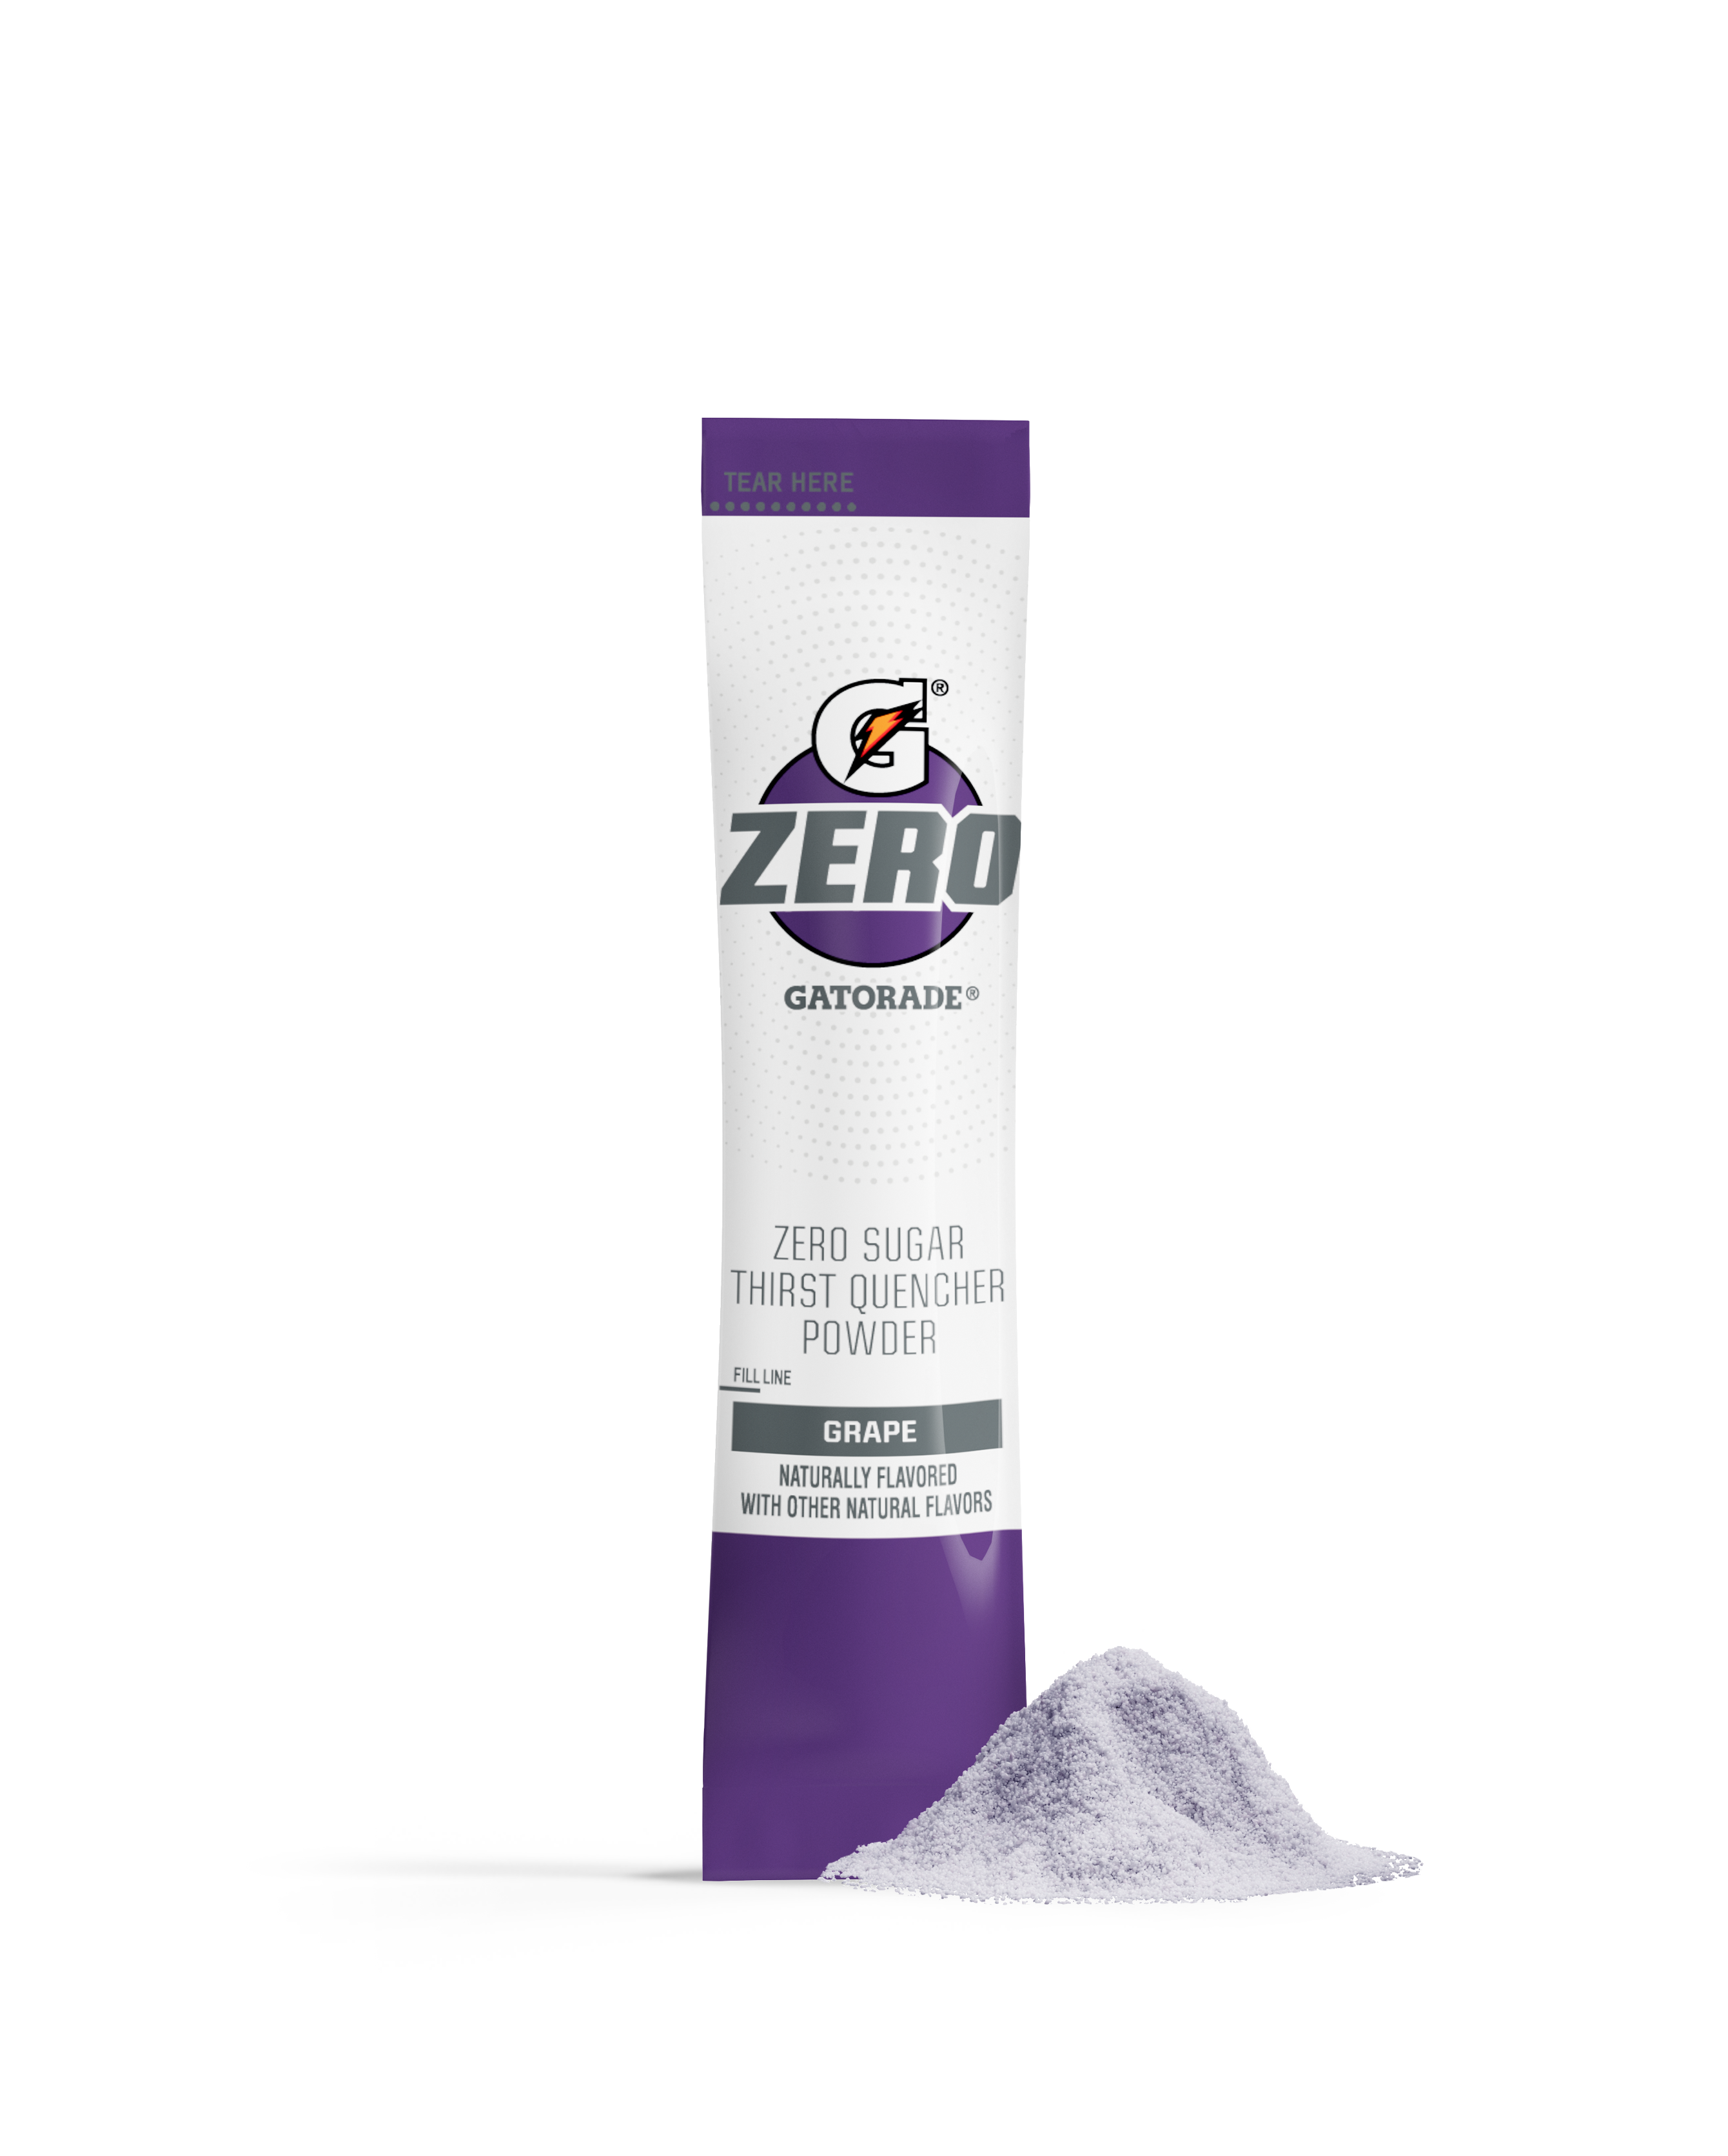 Gatorade zero grape single serve powder